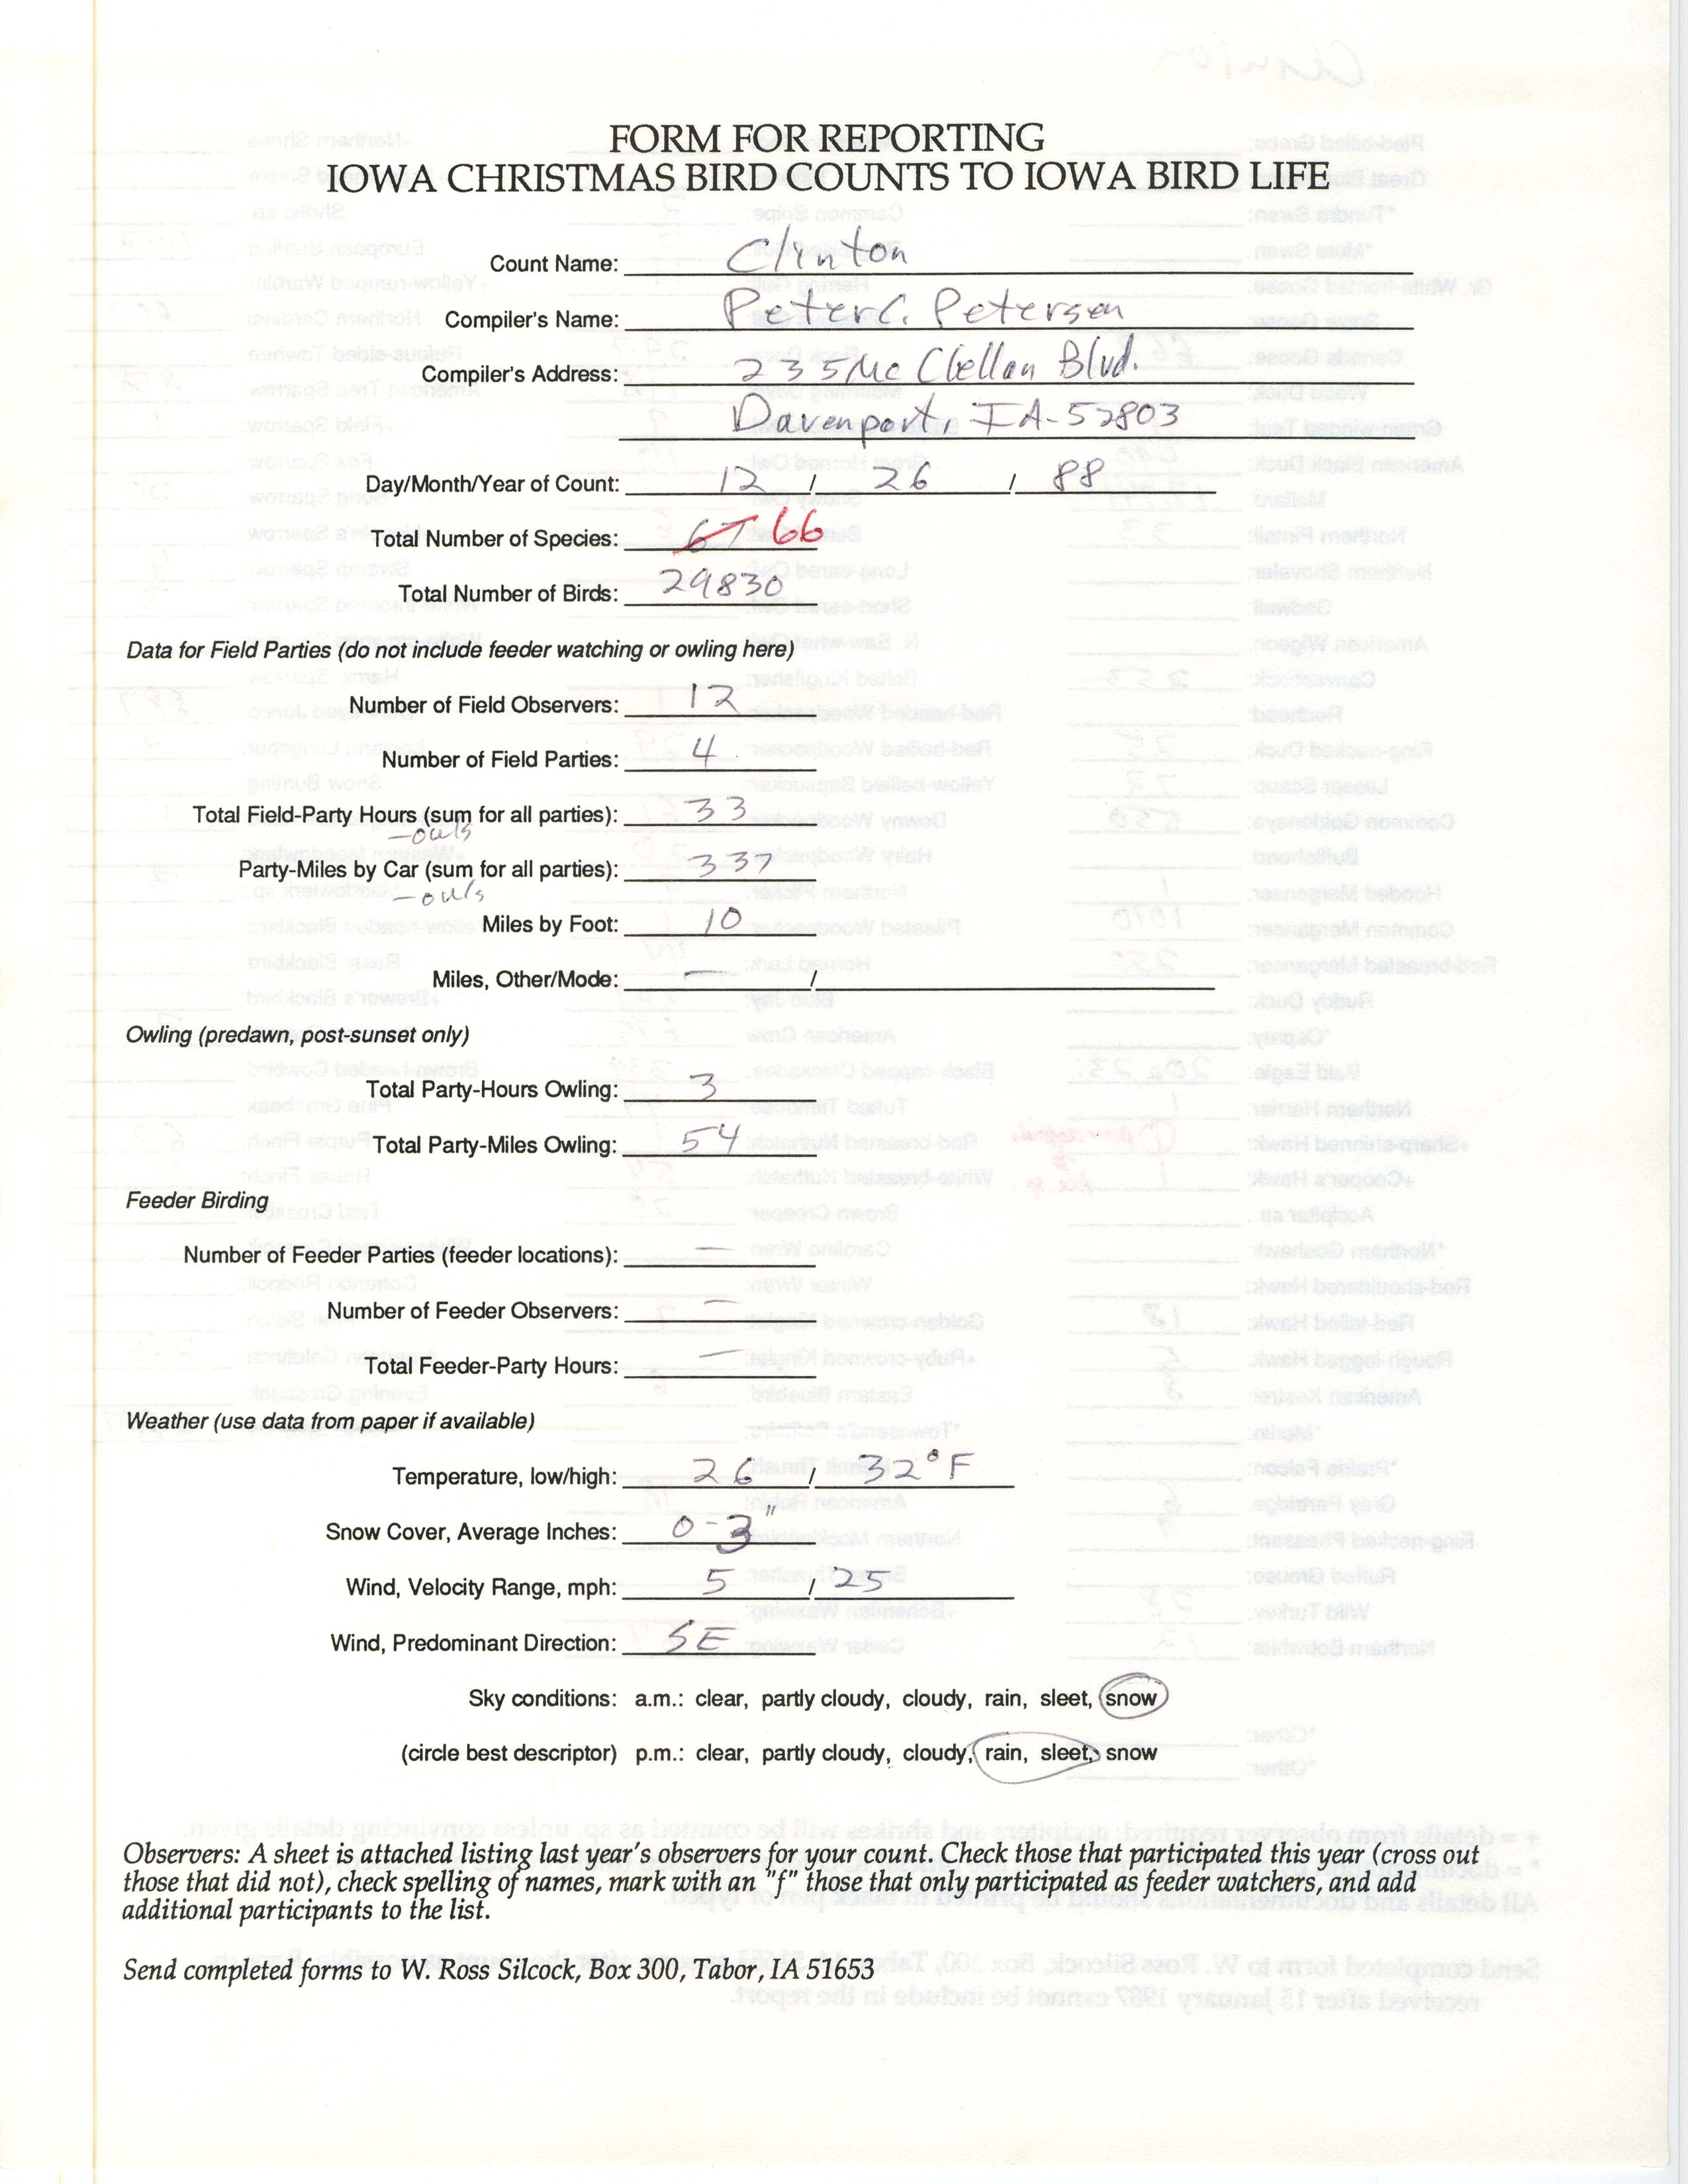 Form for reporting Iowa Christmas bird counts to Iowa Bird Life, Peter C. Petersen, December 26, 1988